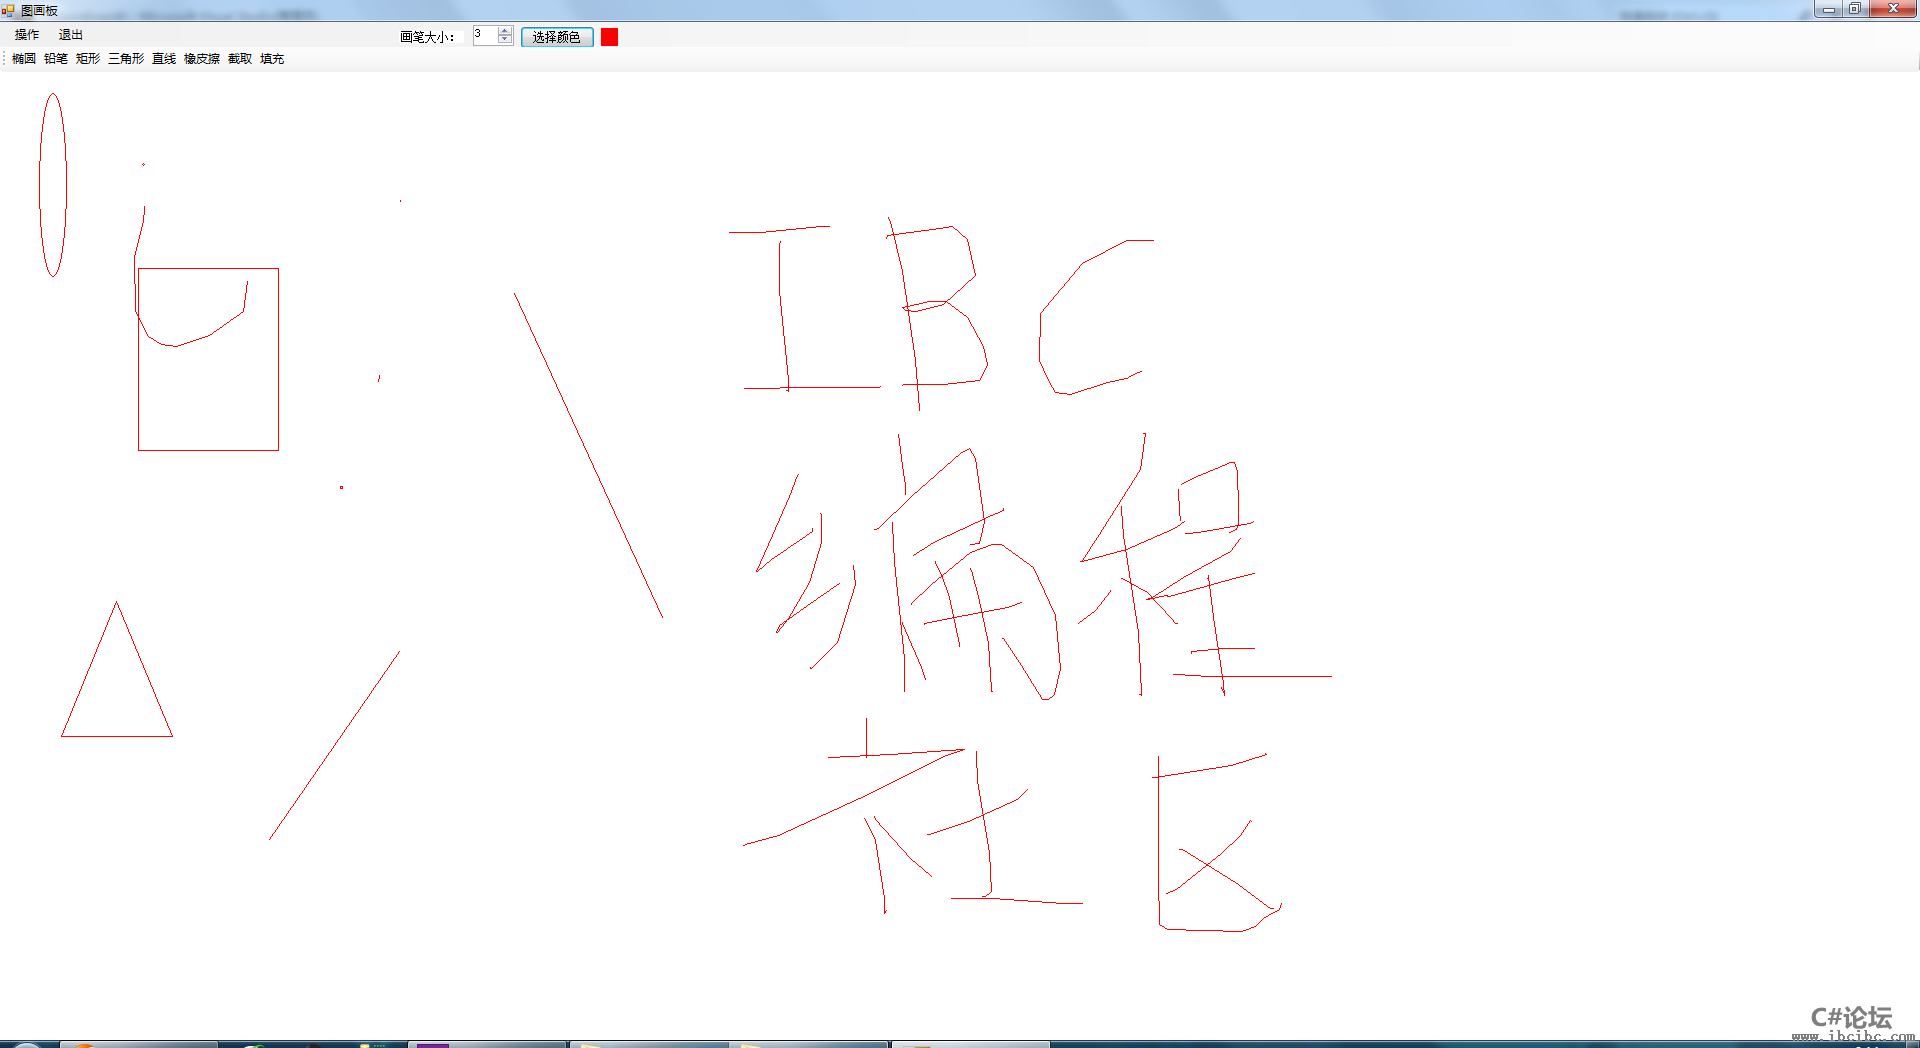 Winform/C#仿windows画图软件 IBC编程社区,www.ibcibc.com.C#教程